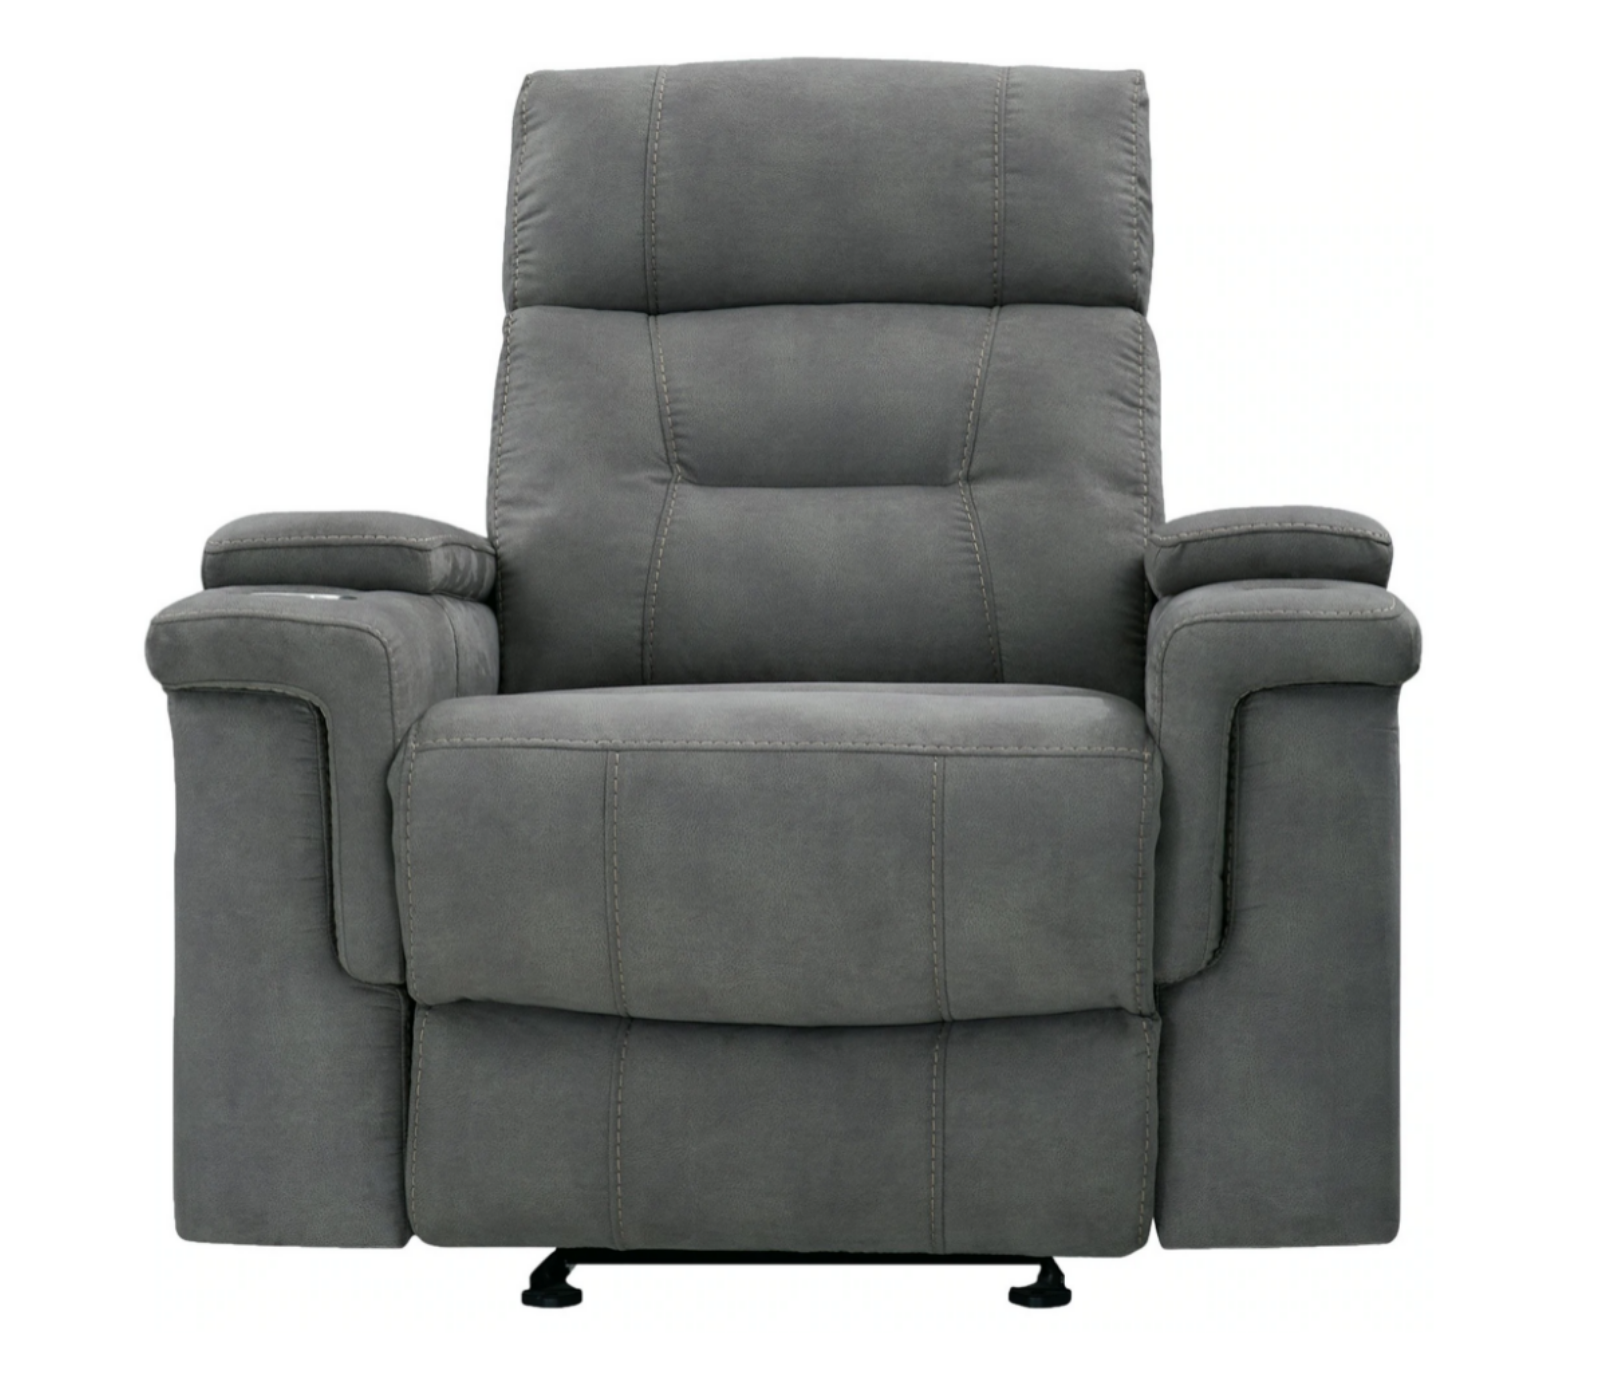 Henrik Chair - Reclining Glider - Grey Fabric